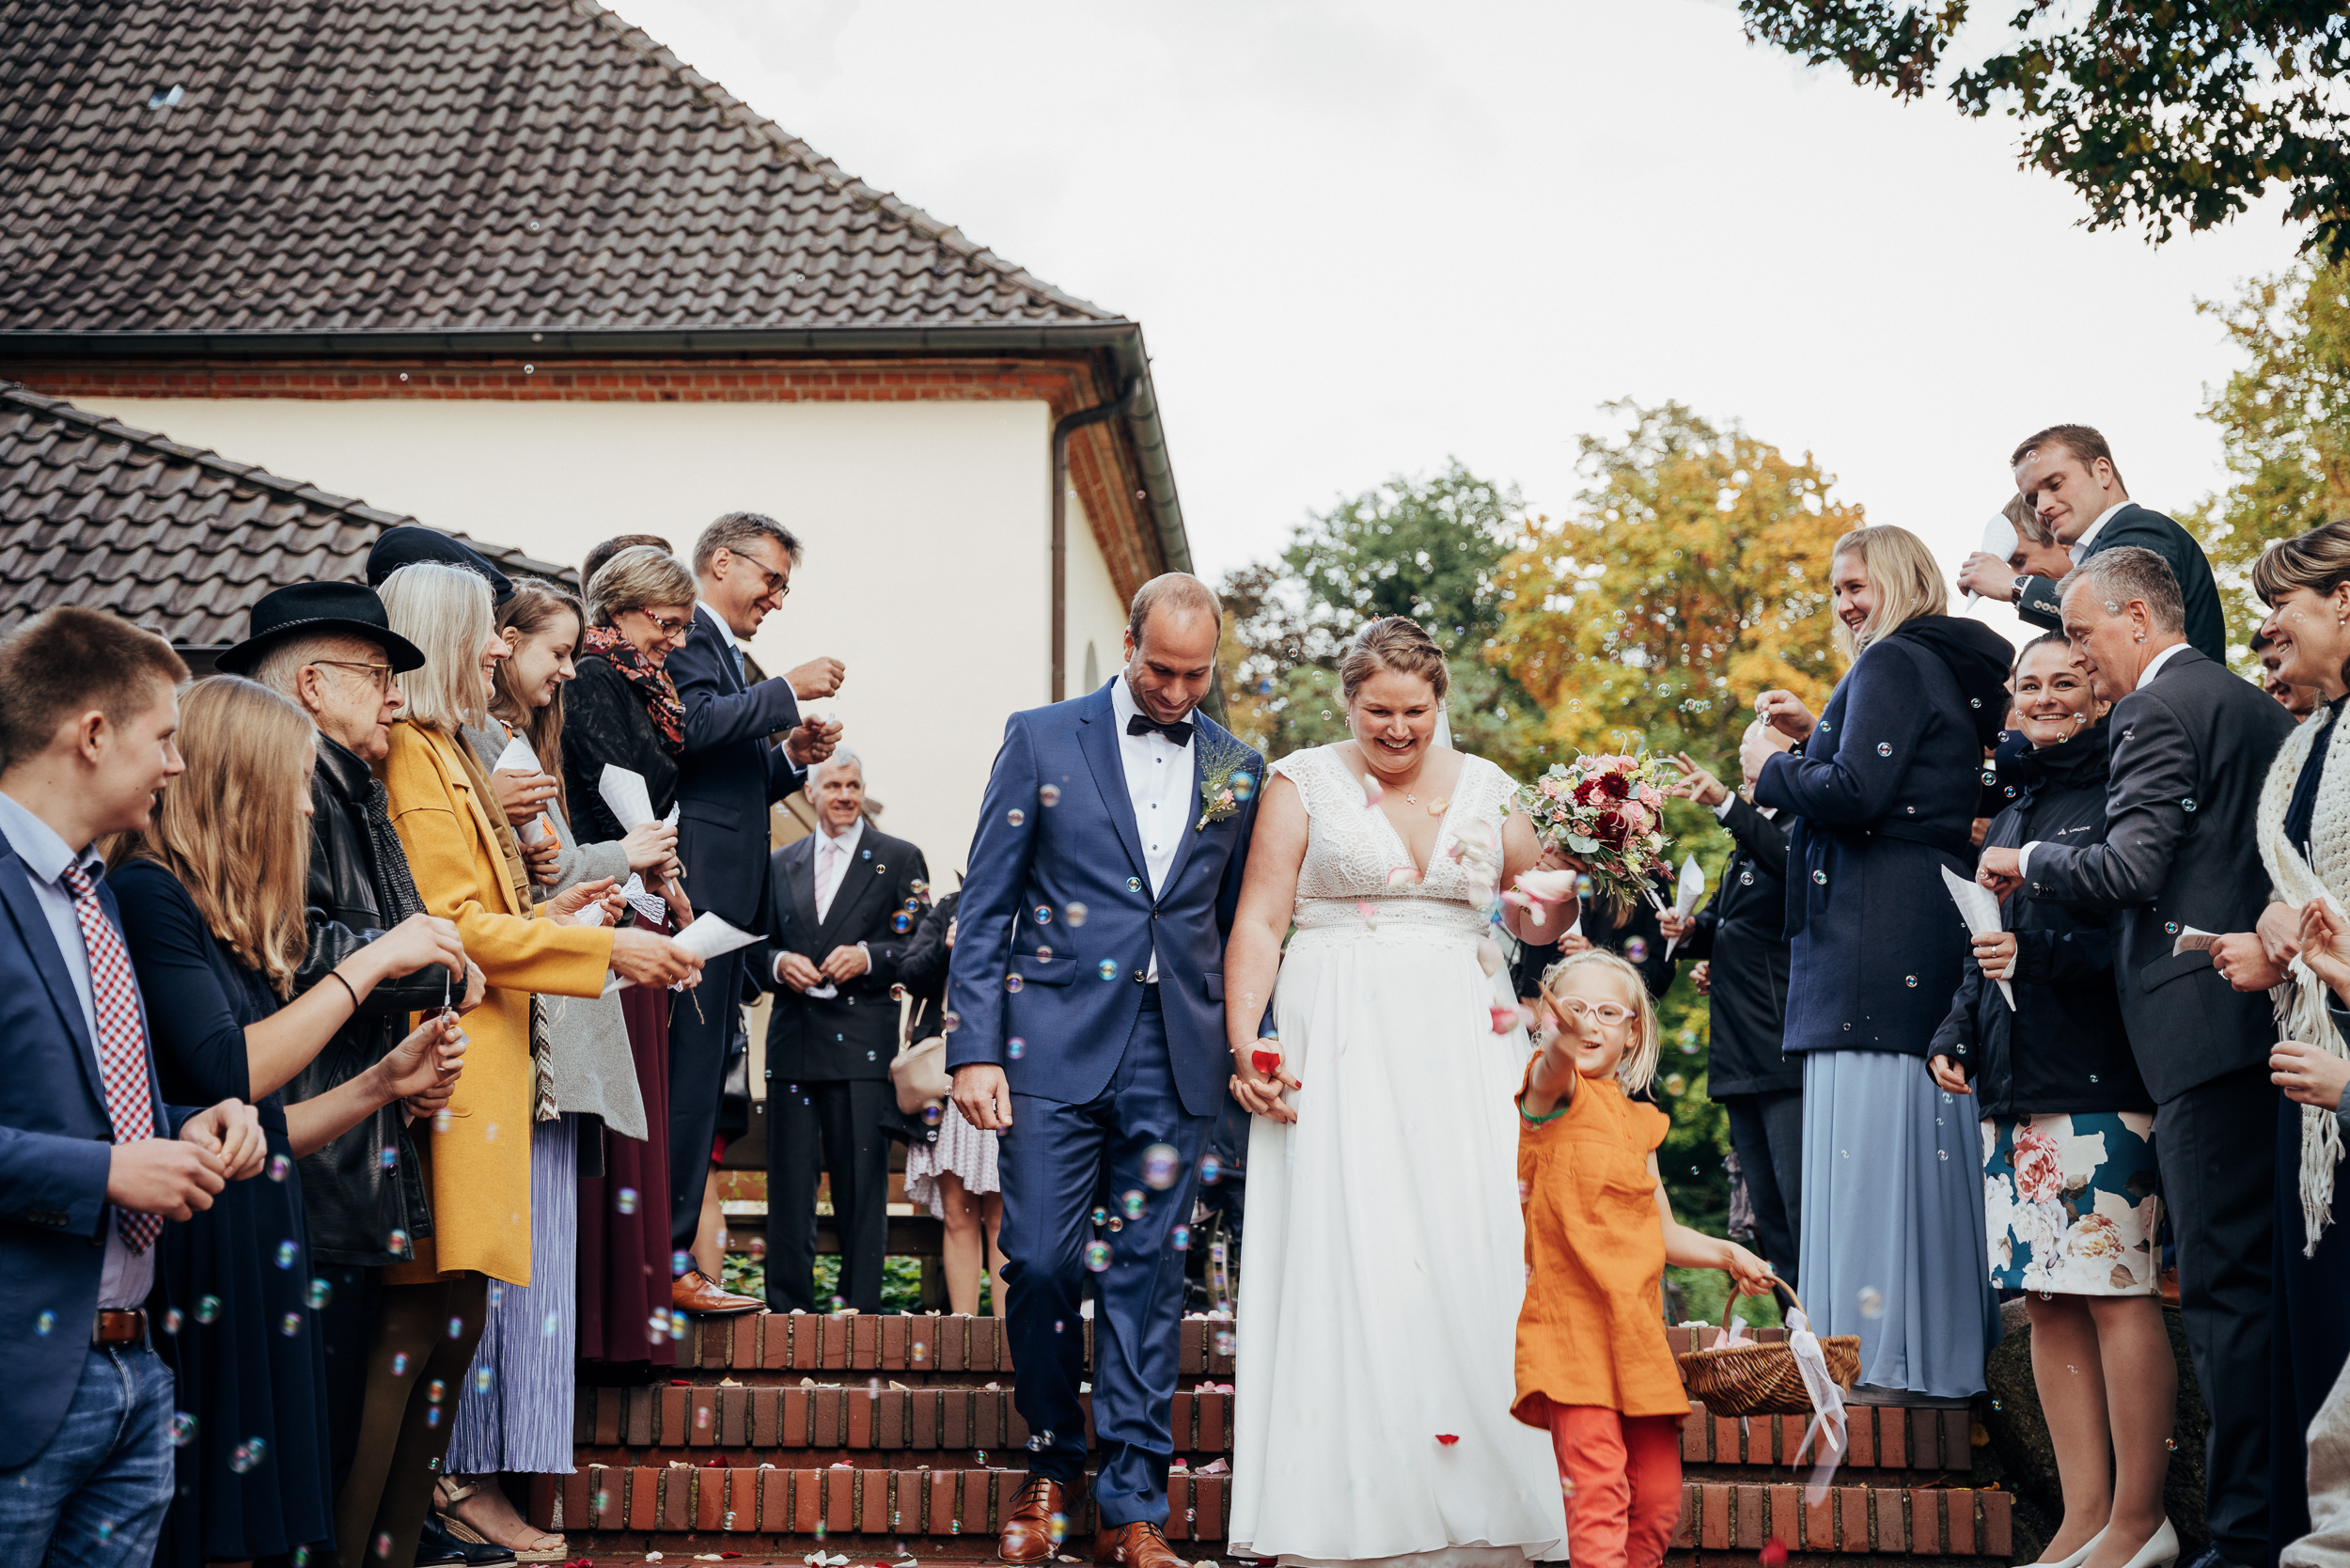 LINE TSOJ FOTOGRAFIE / Hochzeit im Wendland